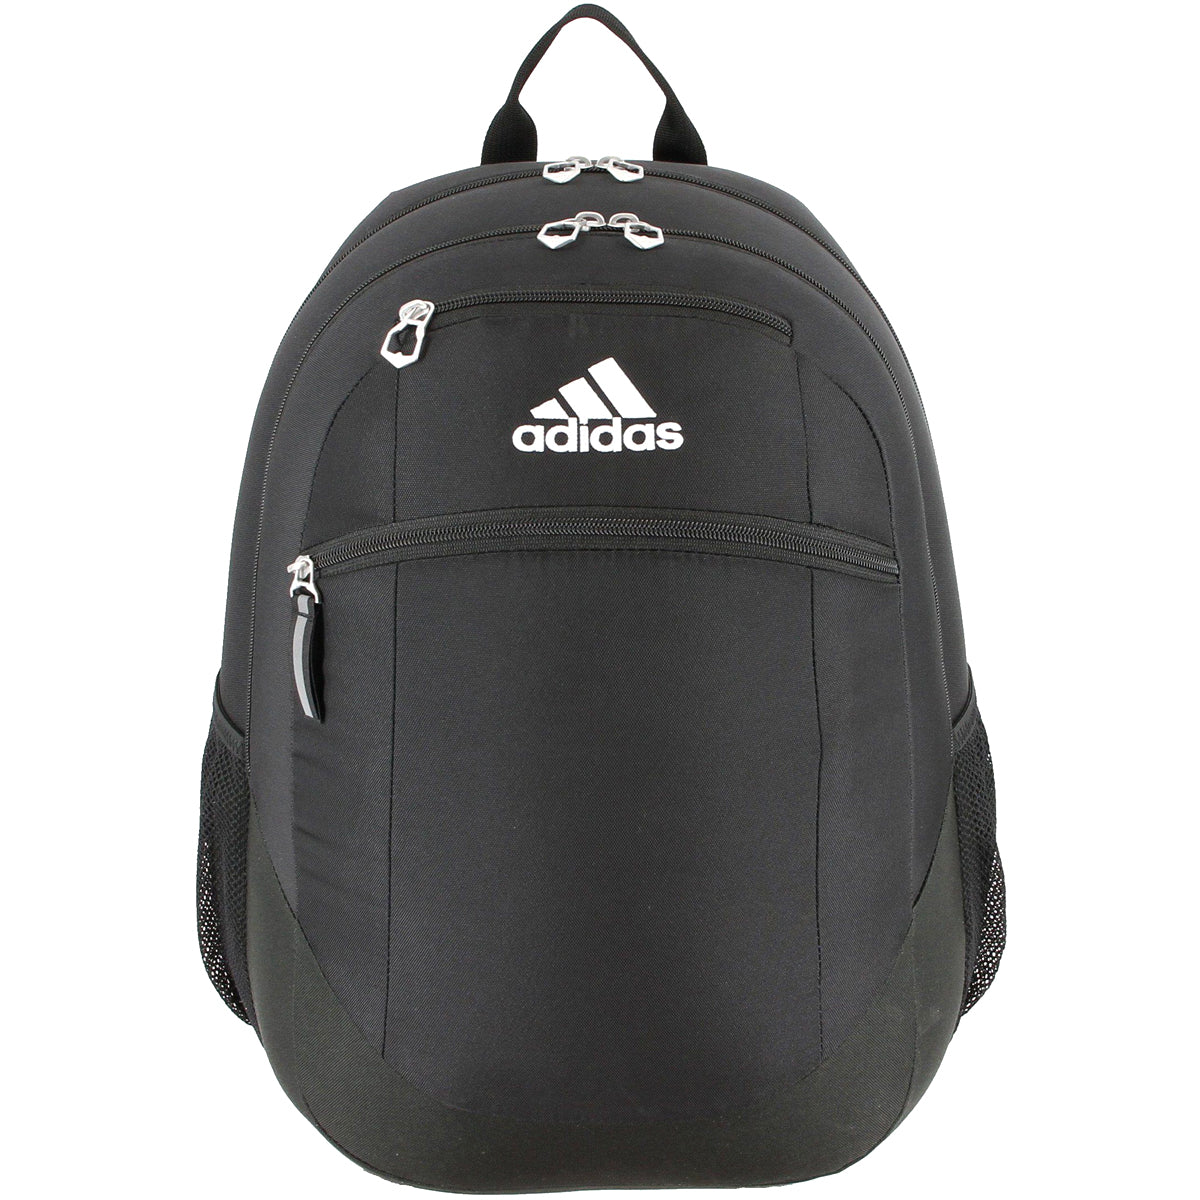 adidas Striker II Team Backpack Bags Adidas One Size Black/White 